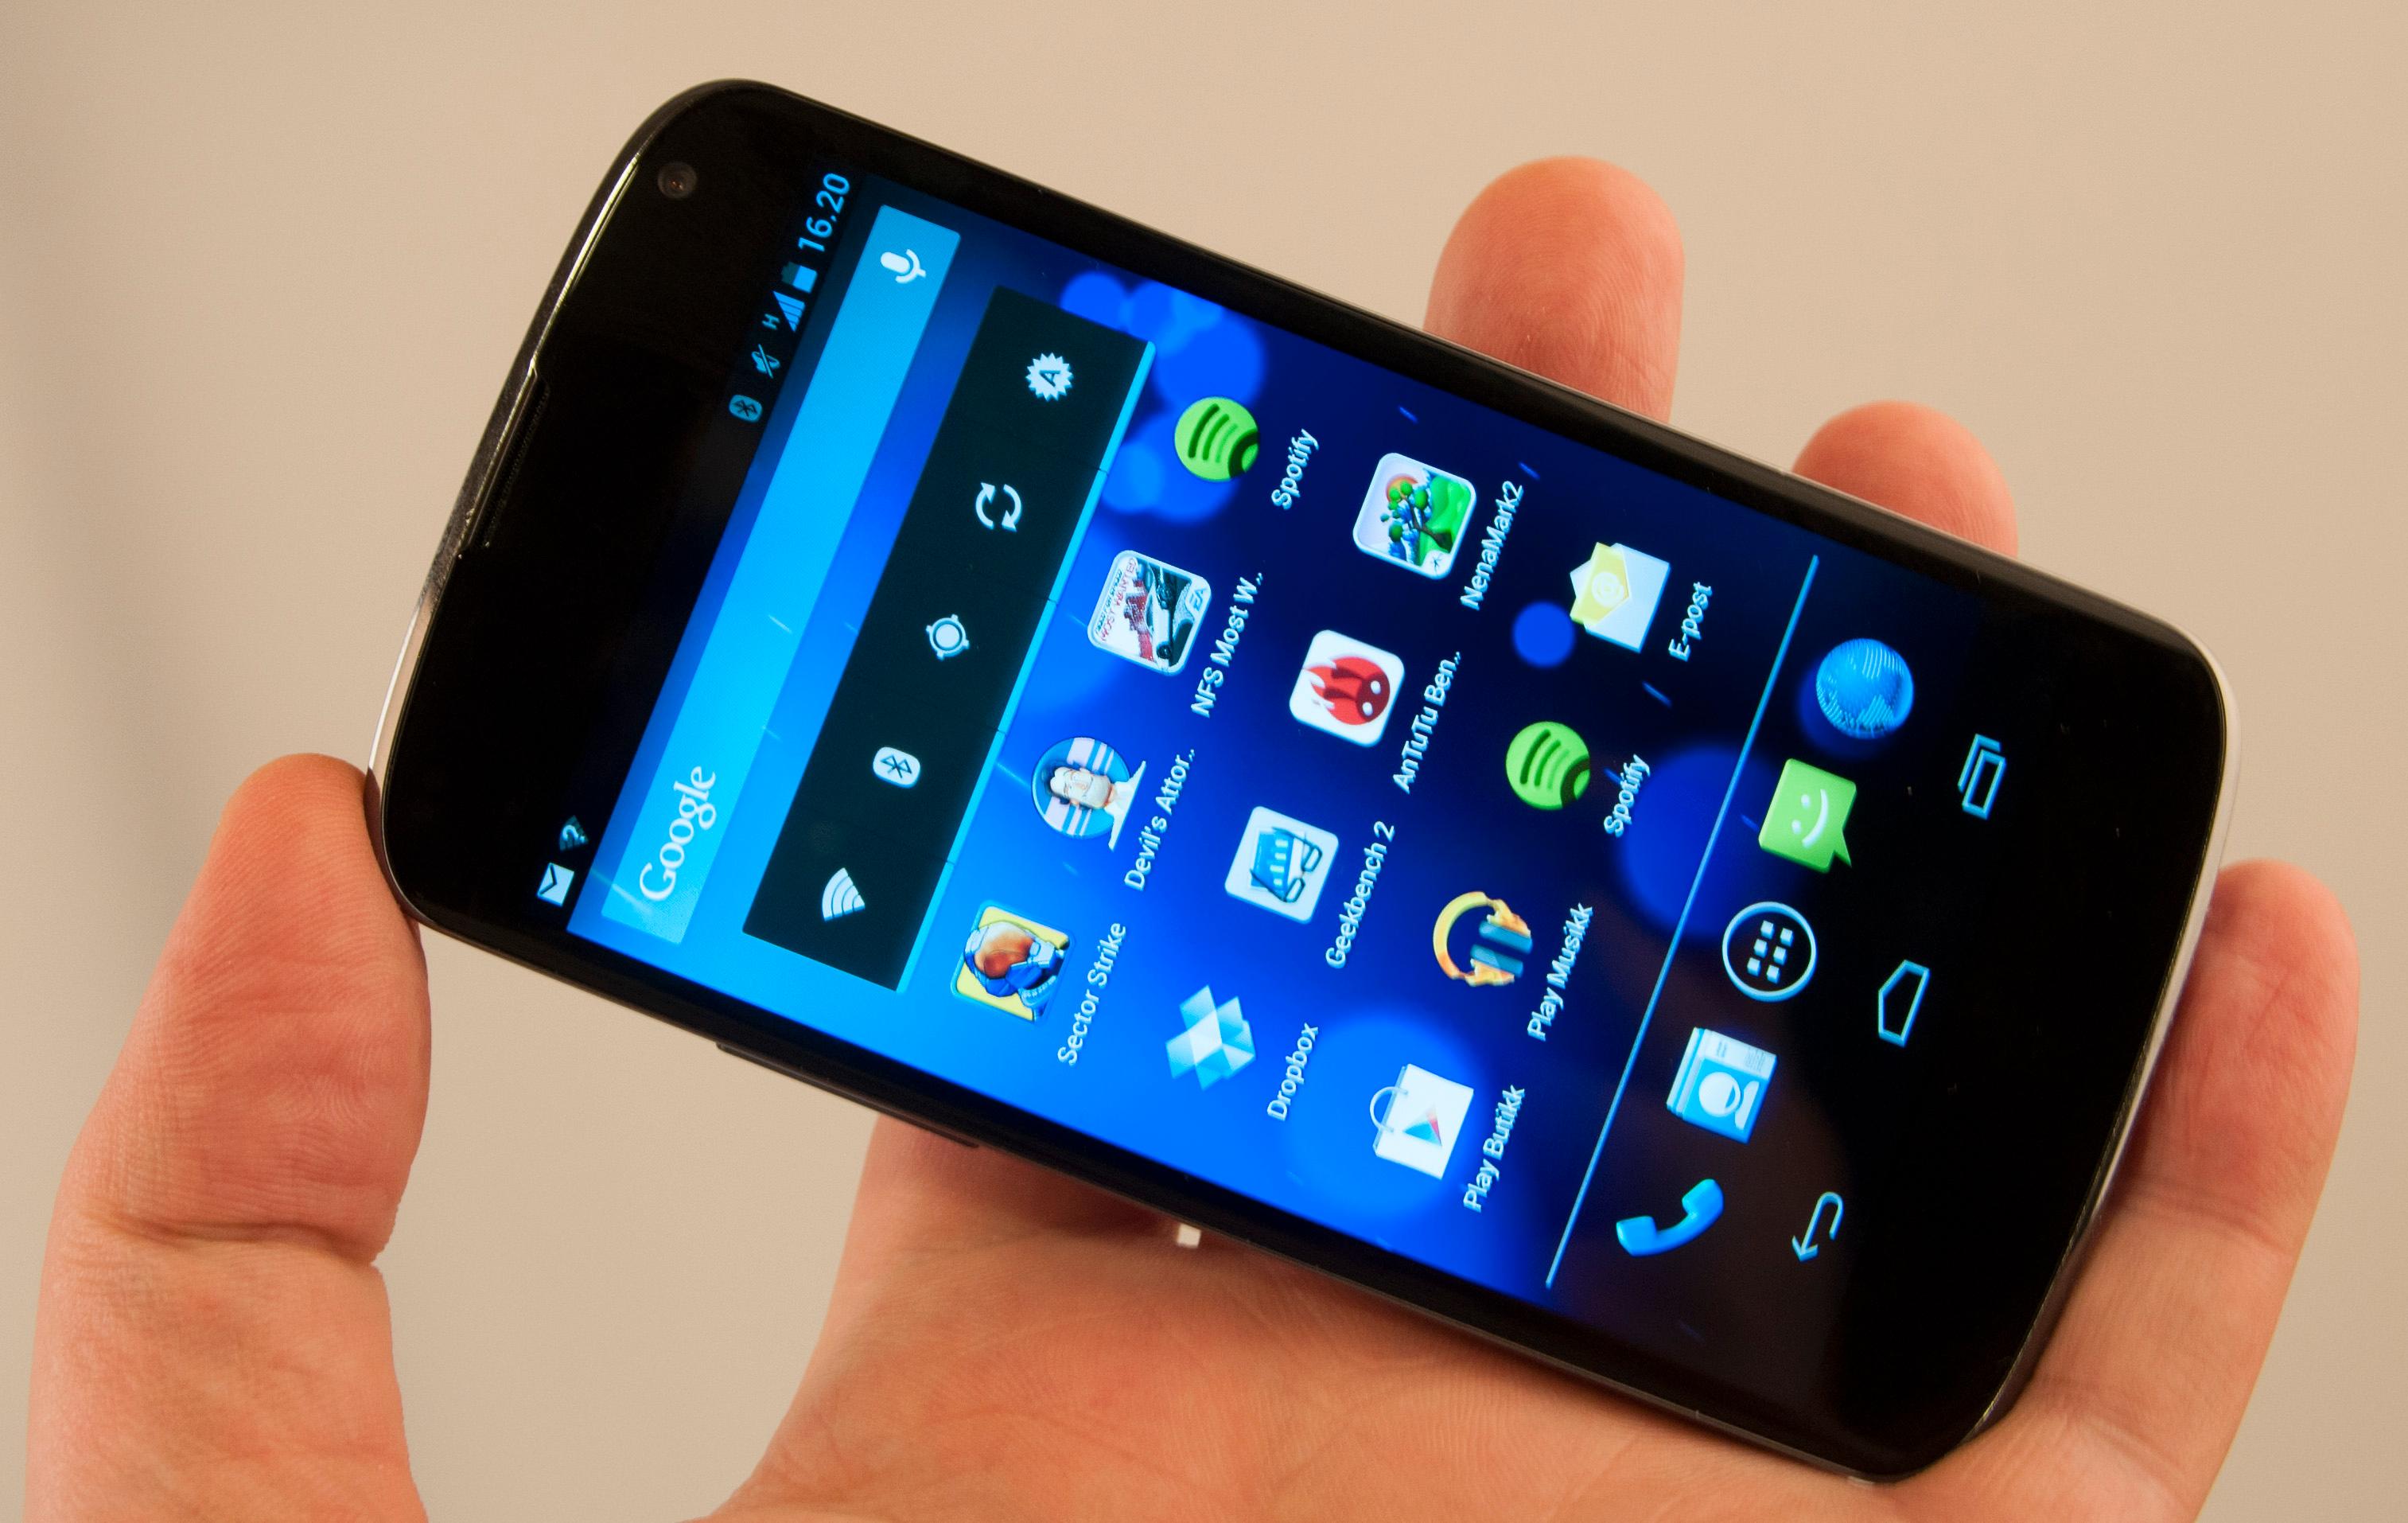 LG Nexus 4.Foto: Finn Jarle Kvalheim, Amobil.no